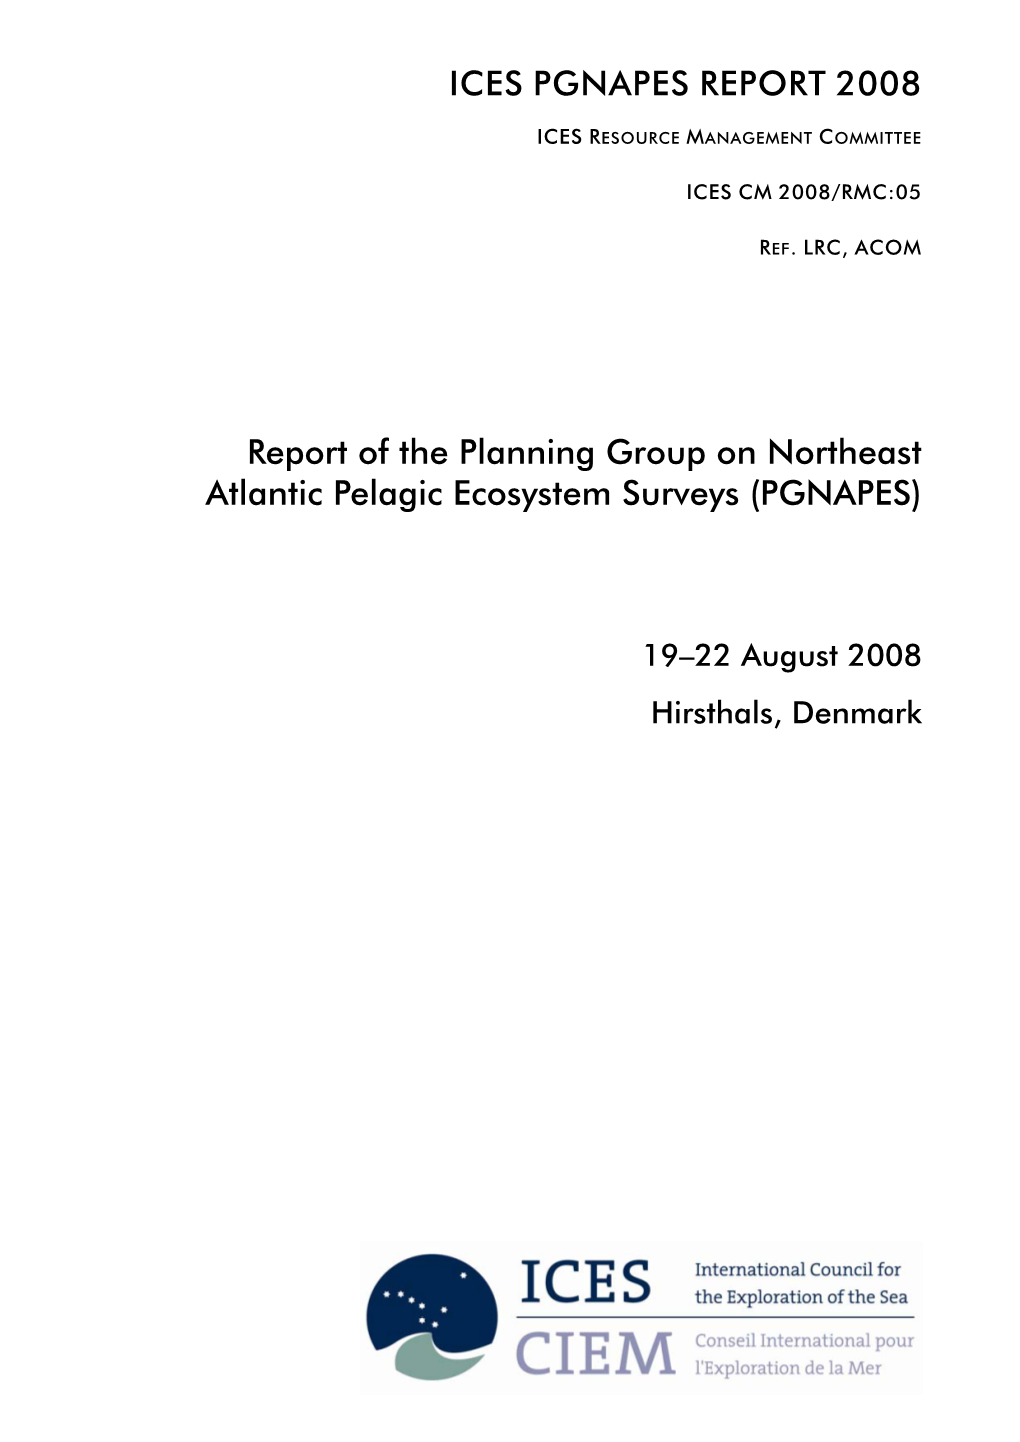 Report of the Planning Group on Northeast Atlantic Pelagic Ecosystem Surveys (PGNAPES)